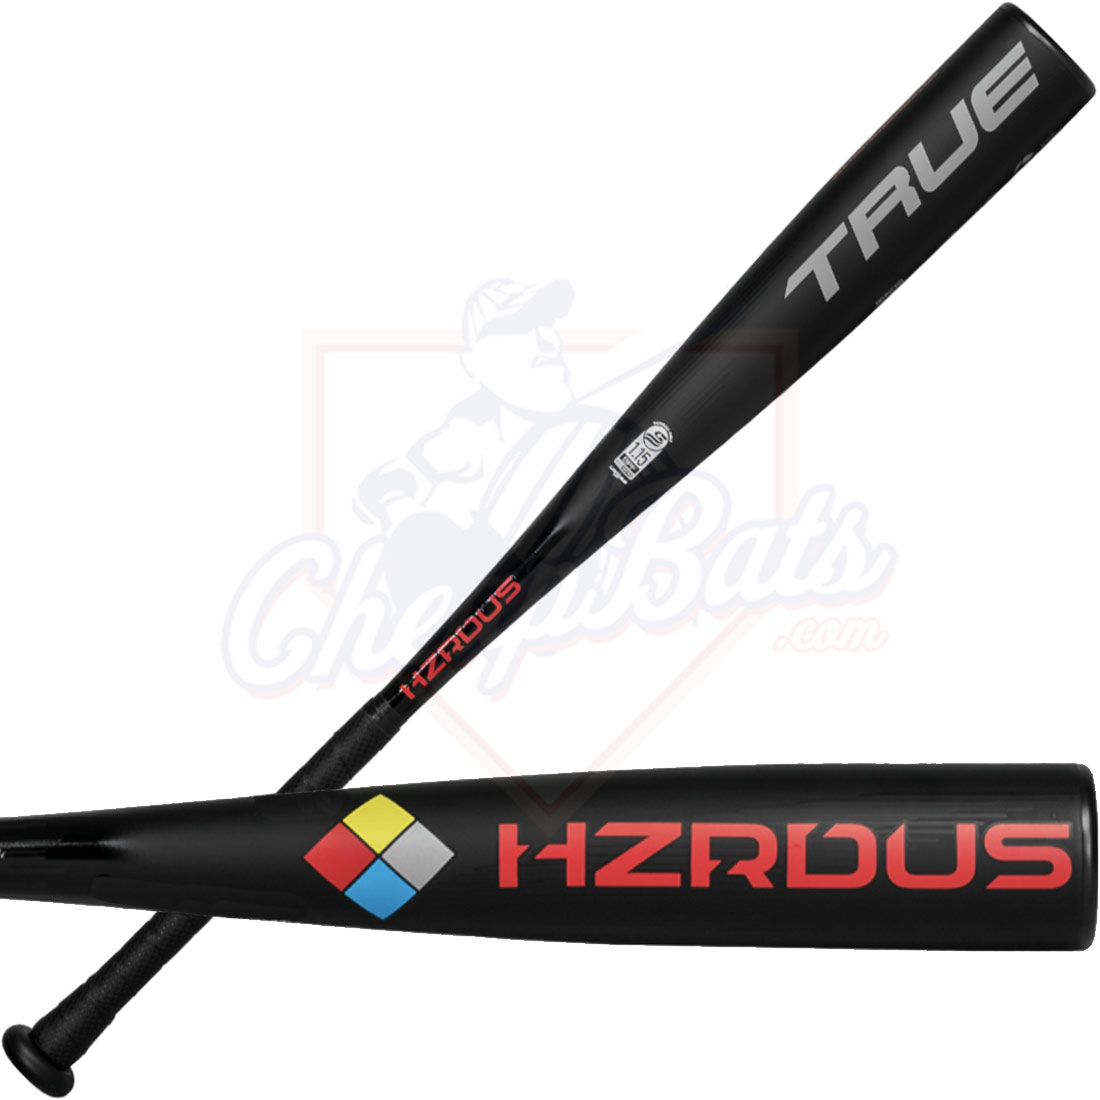 True Temper HZRDUS Youth USSSA Baseball Bat -8oz UT-22-HZR-X-8